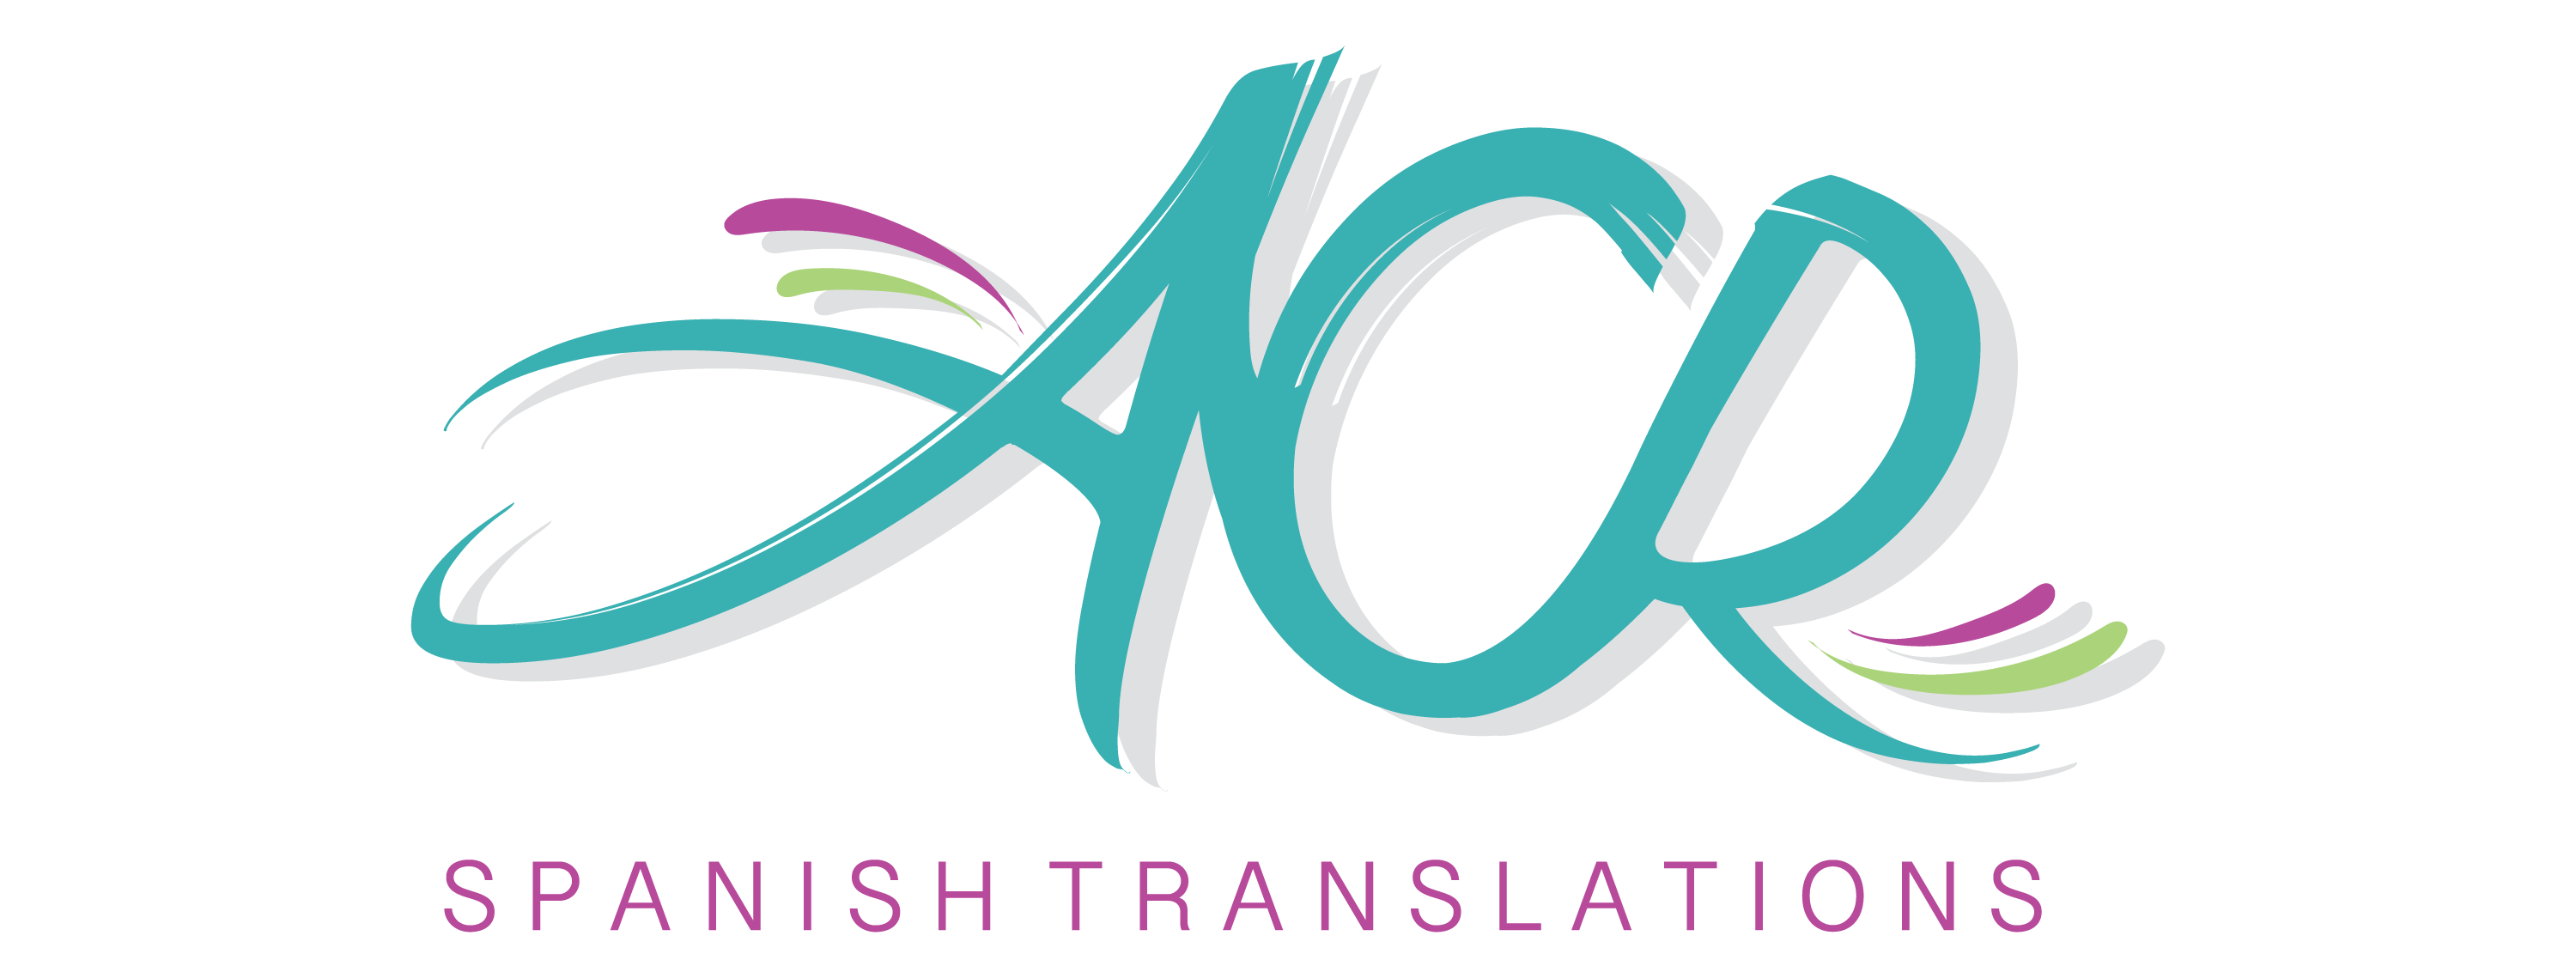 ACR Spanish Translations